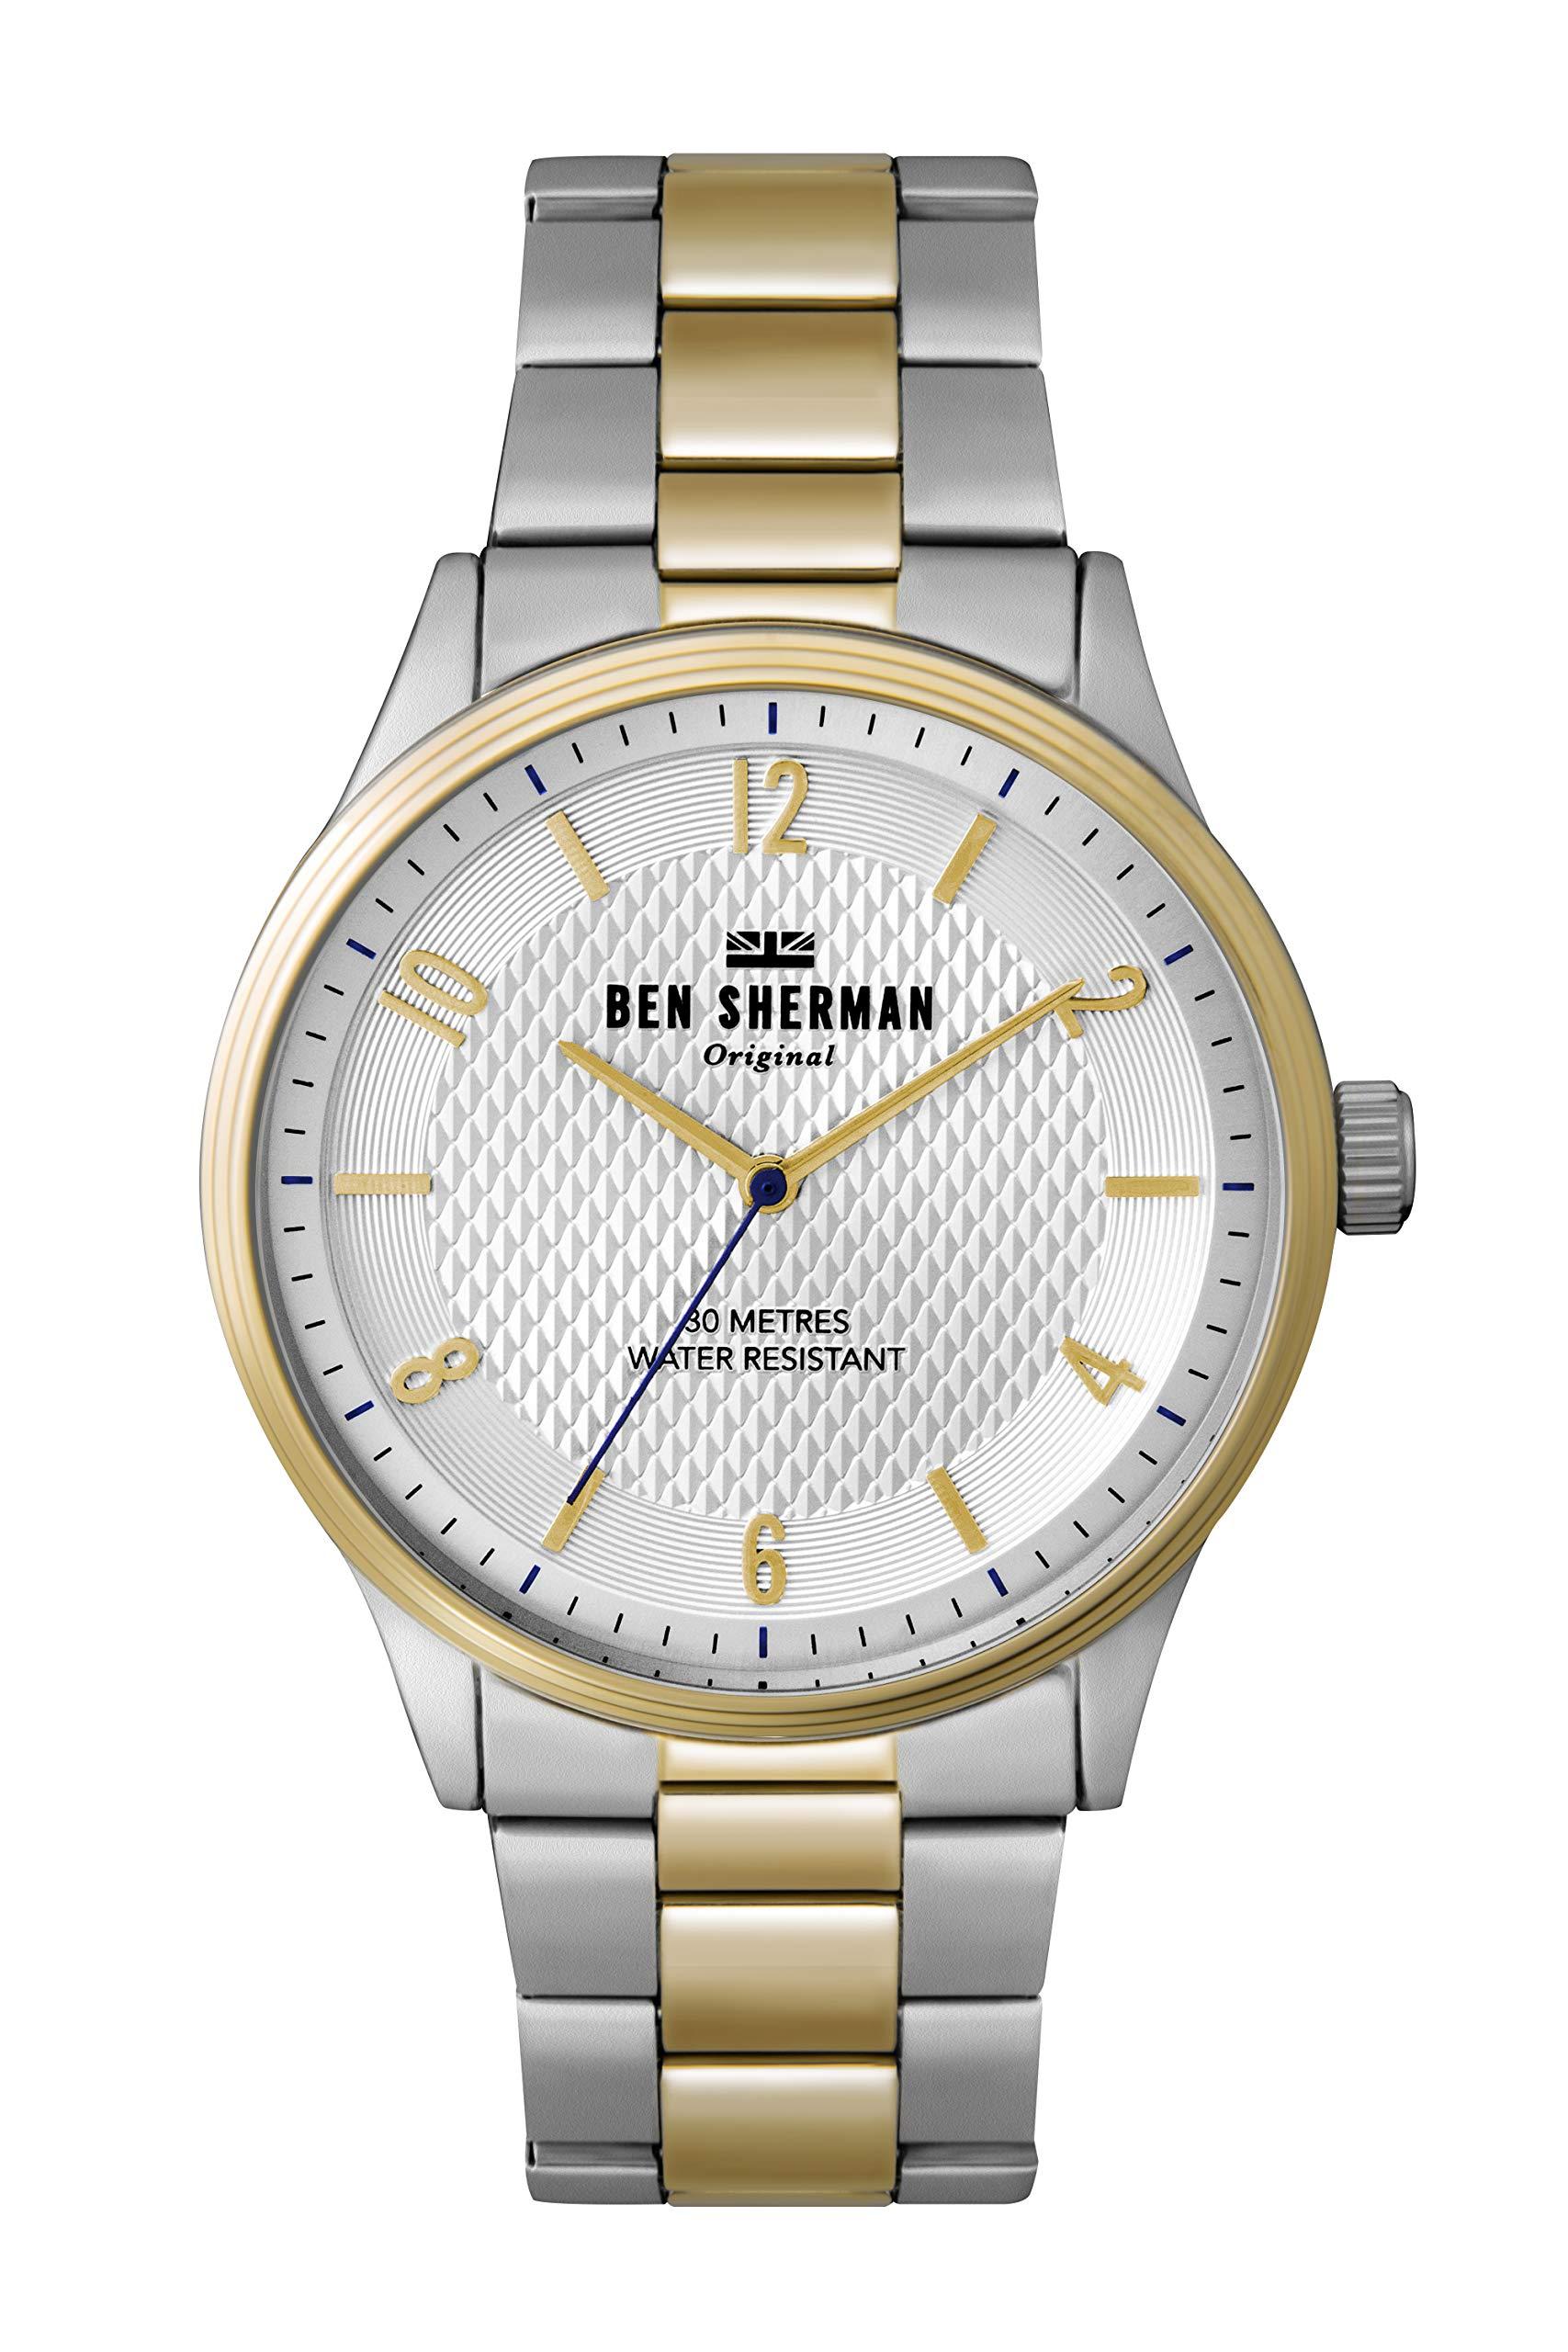 Ben Sherman S Analogue Classic Quartz Watch With Aluminium Strap Wb025sgm  in White (Metallic) for Men - Save 42% - Lyst